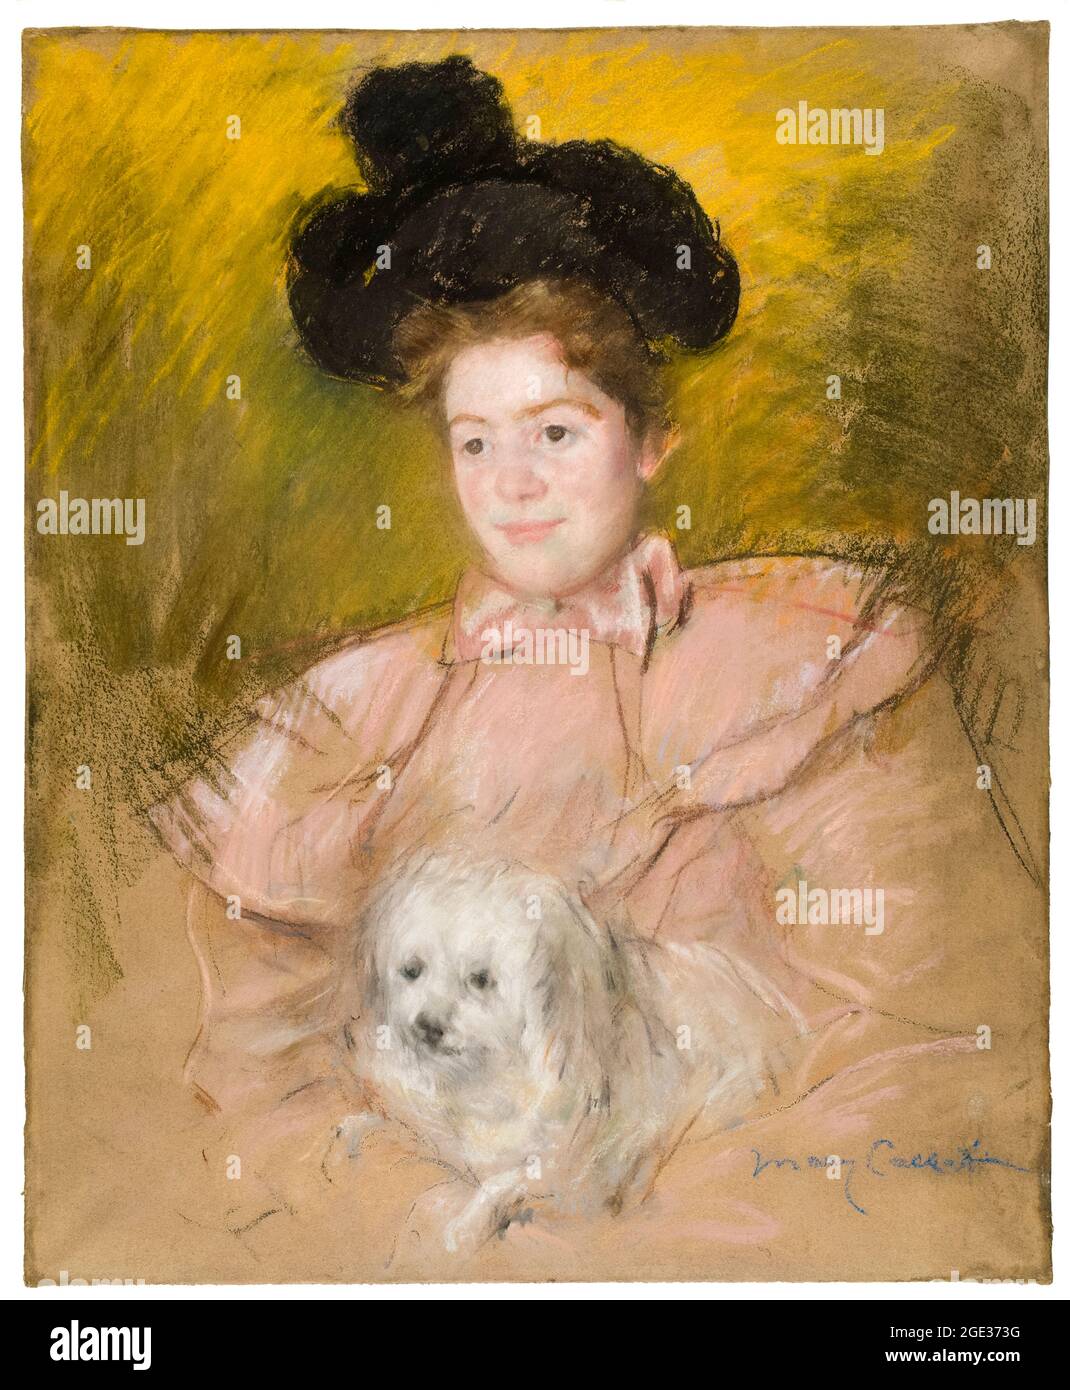 Mary Cassatt, Woman in Raspberry Costume Holding a Dog, portrait drawing, circa 1901 Stock Photo